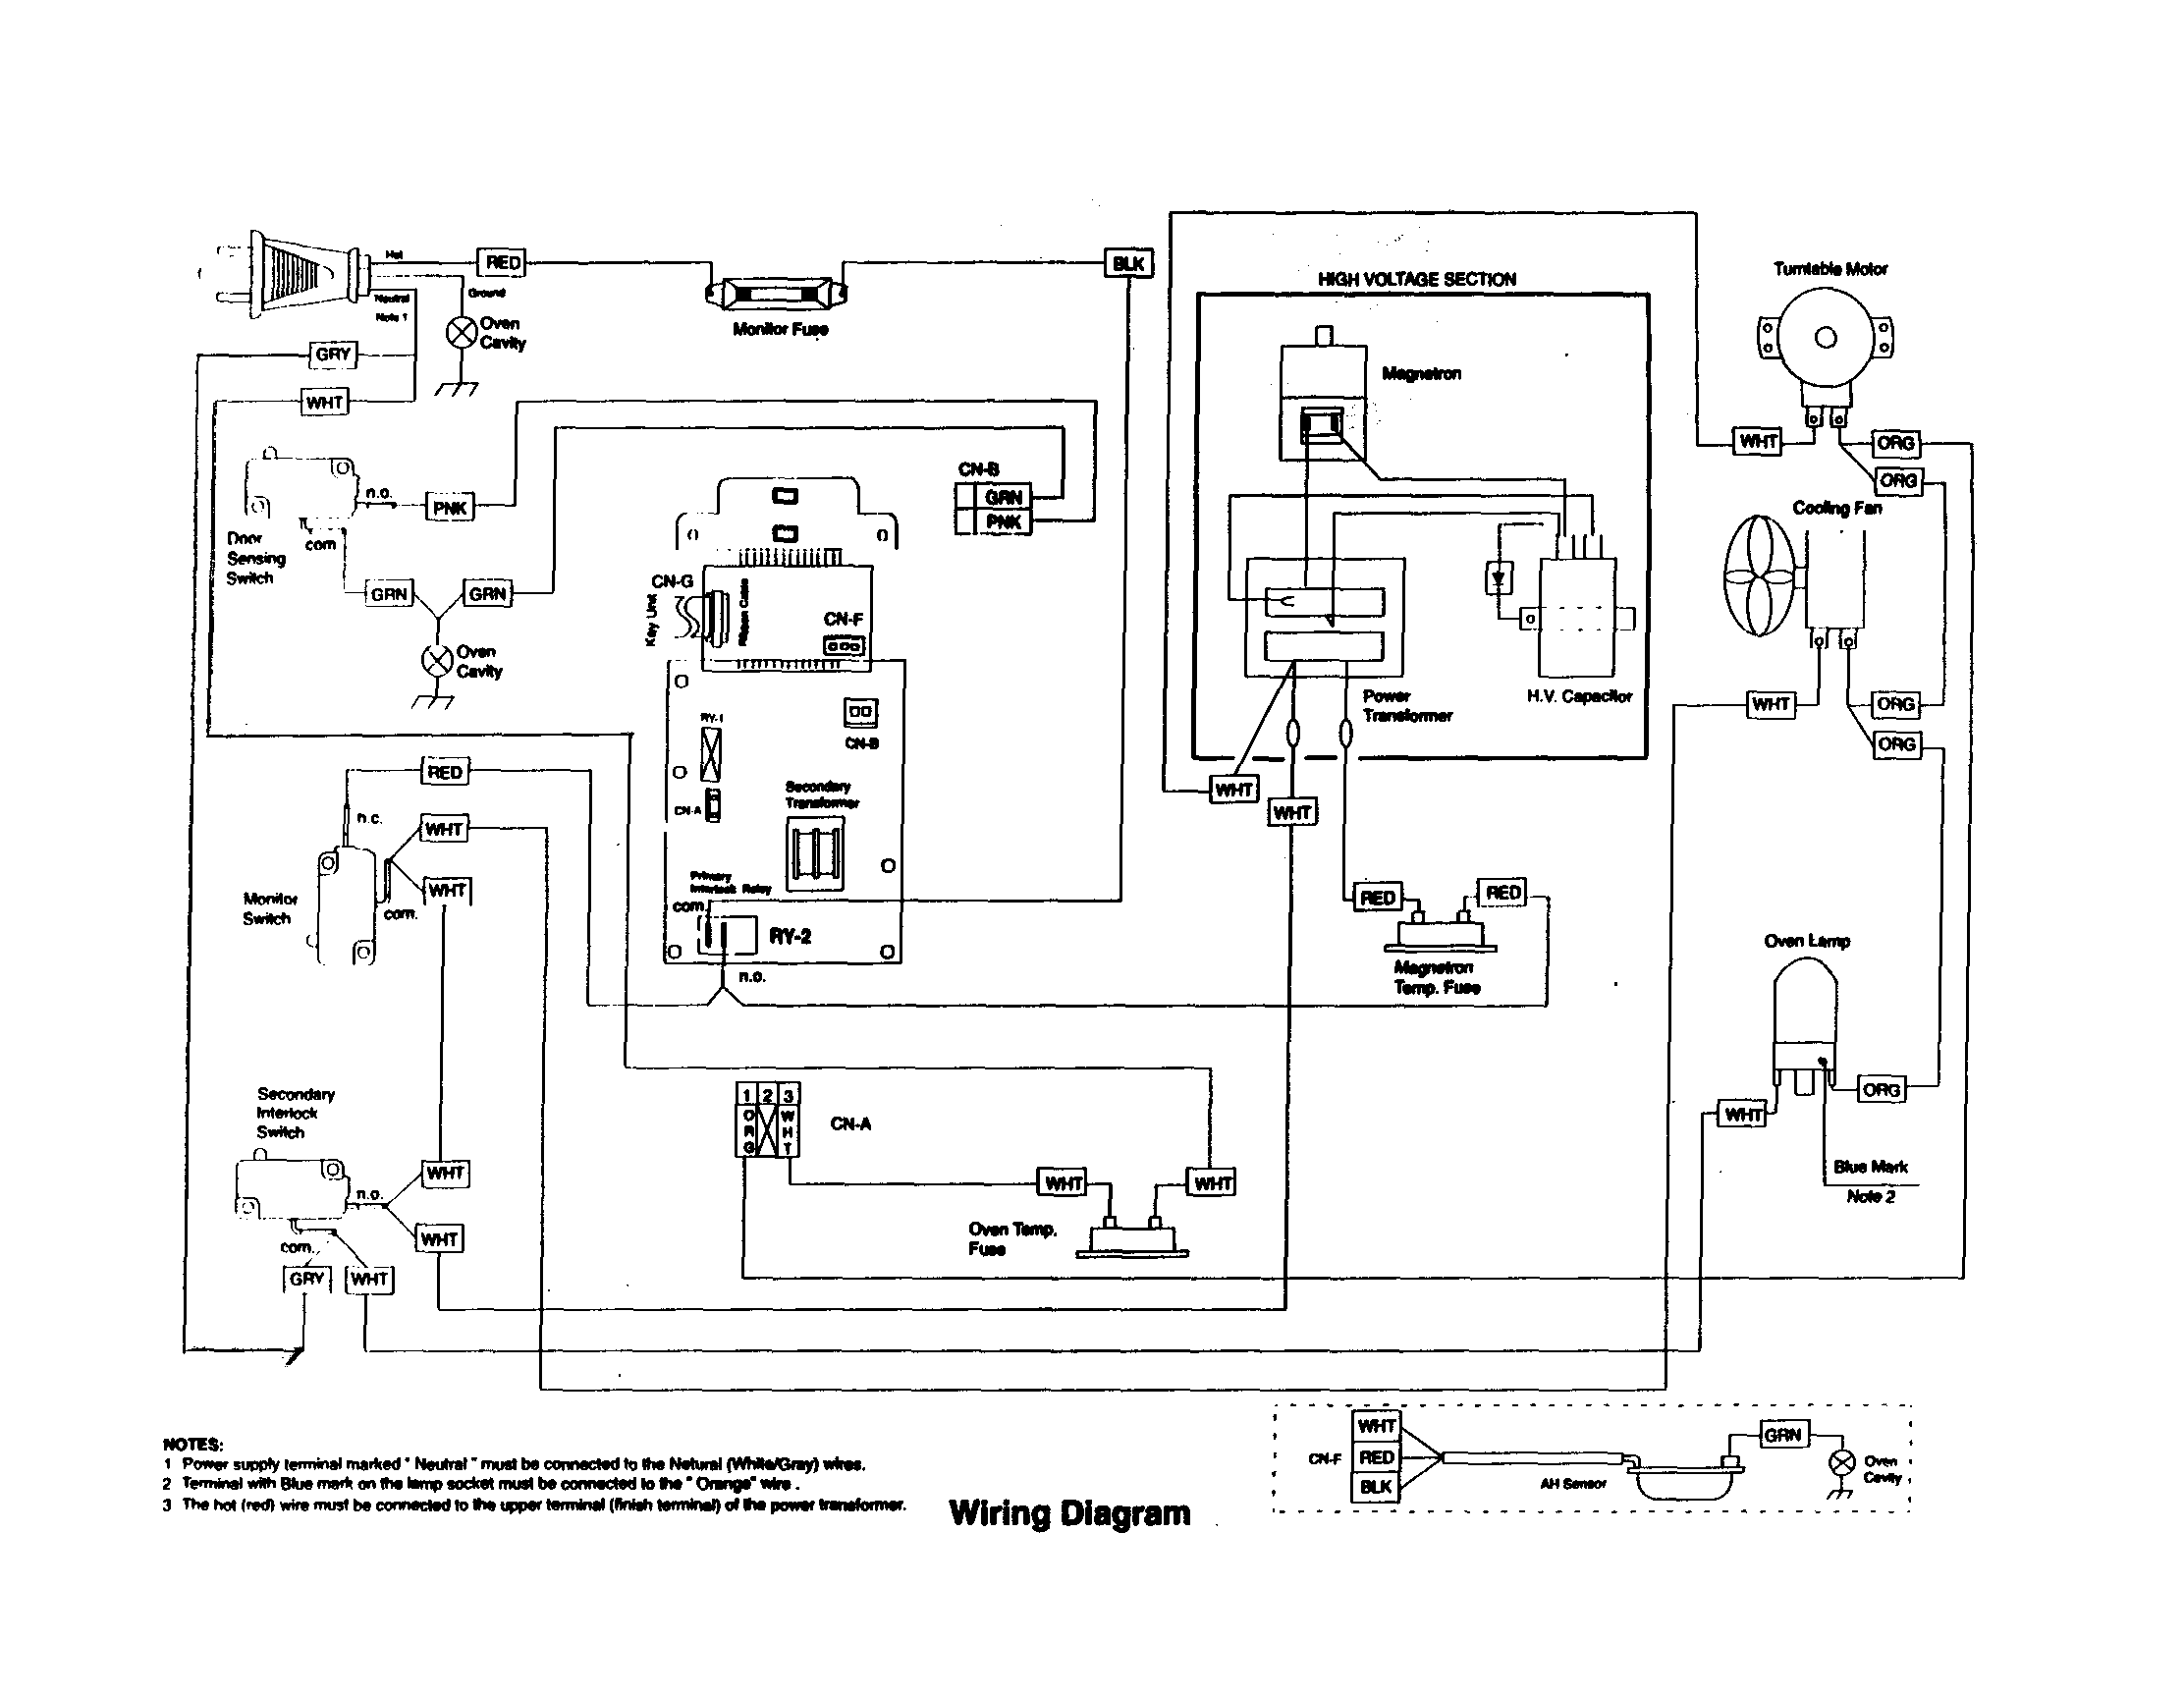 [DIAGRAM] Kitchenaid Microwave Wiring Diagram FULL Version HD Quality